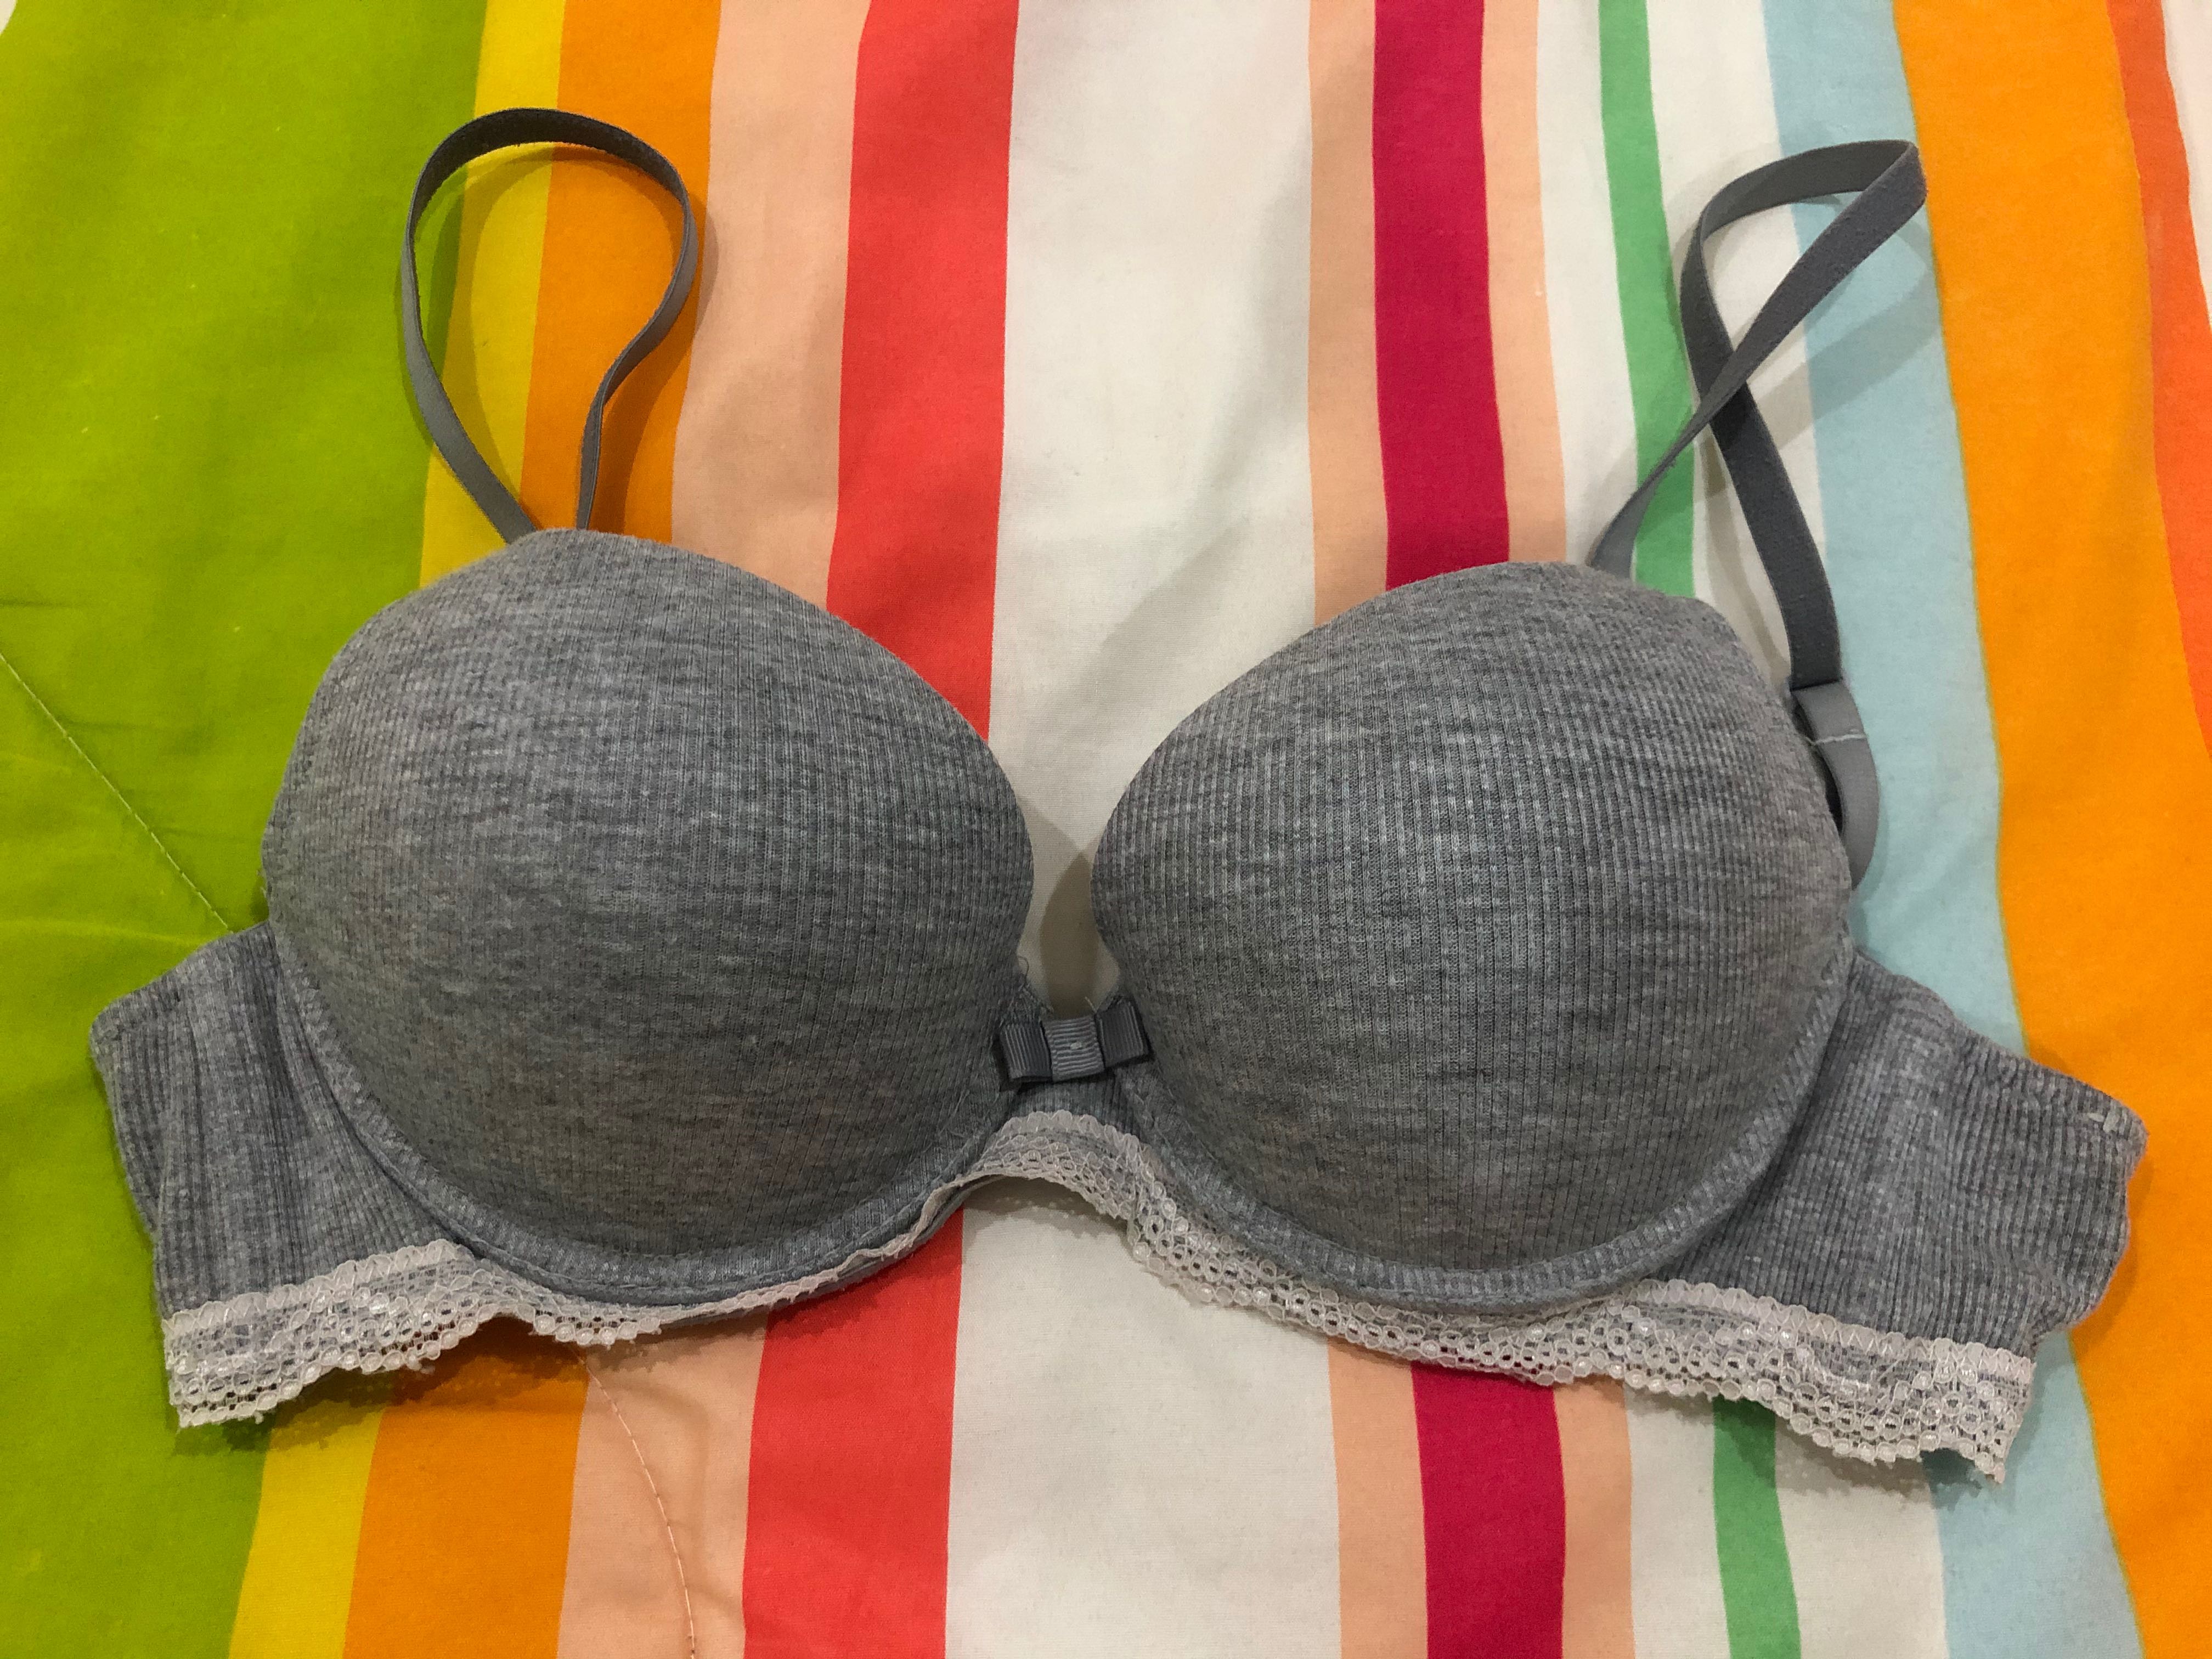 Preloved used bra for sale, Singapore